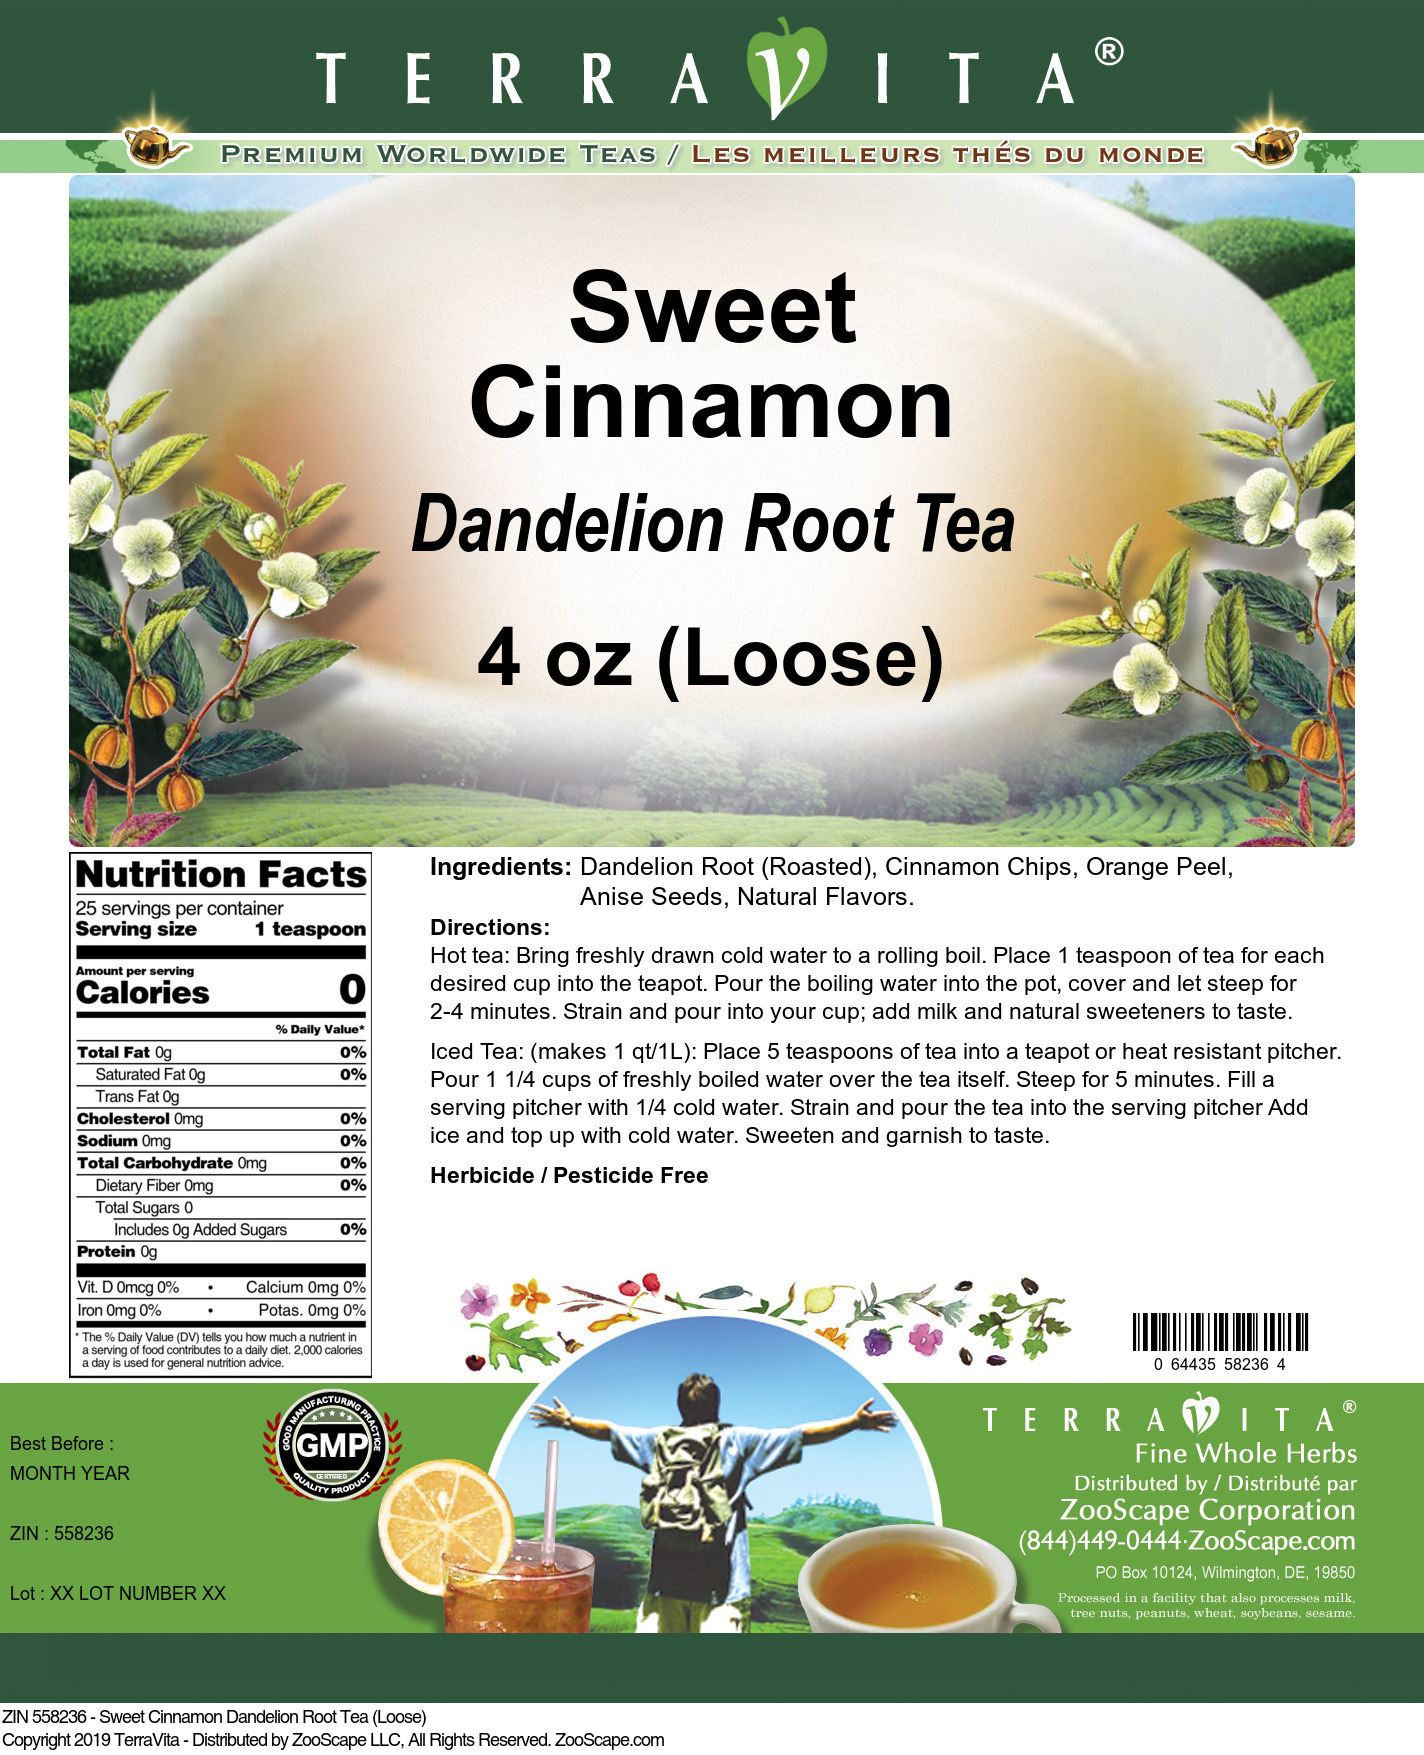 Sweet Cinnamon Dandelion Root Tea (Loose) - Label